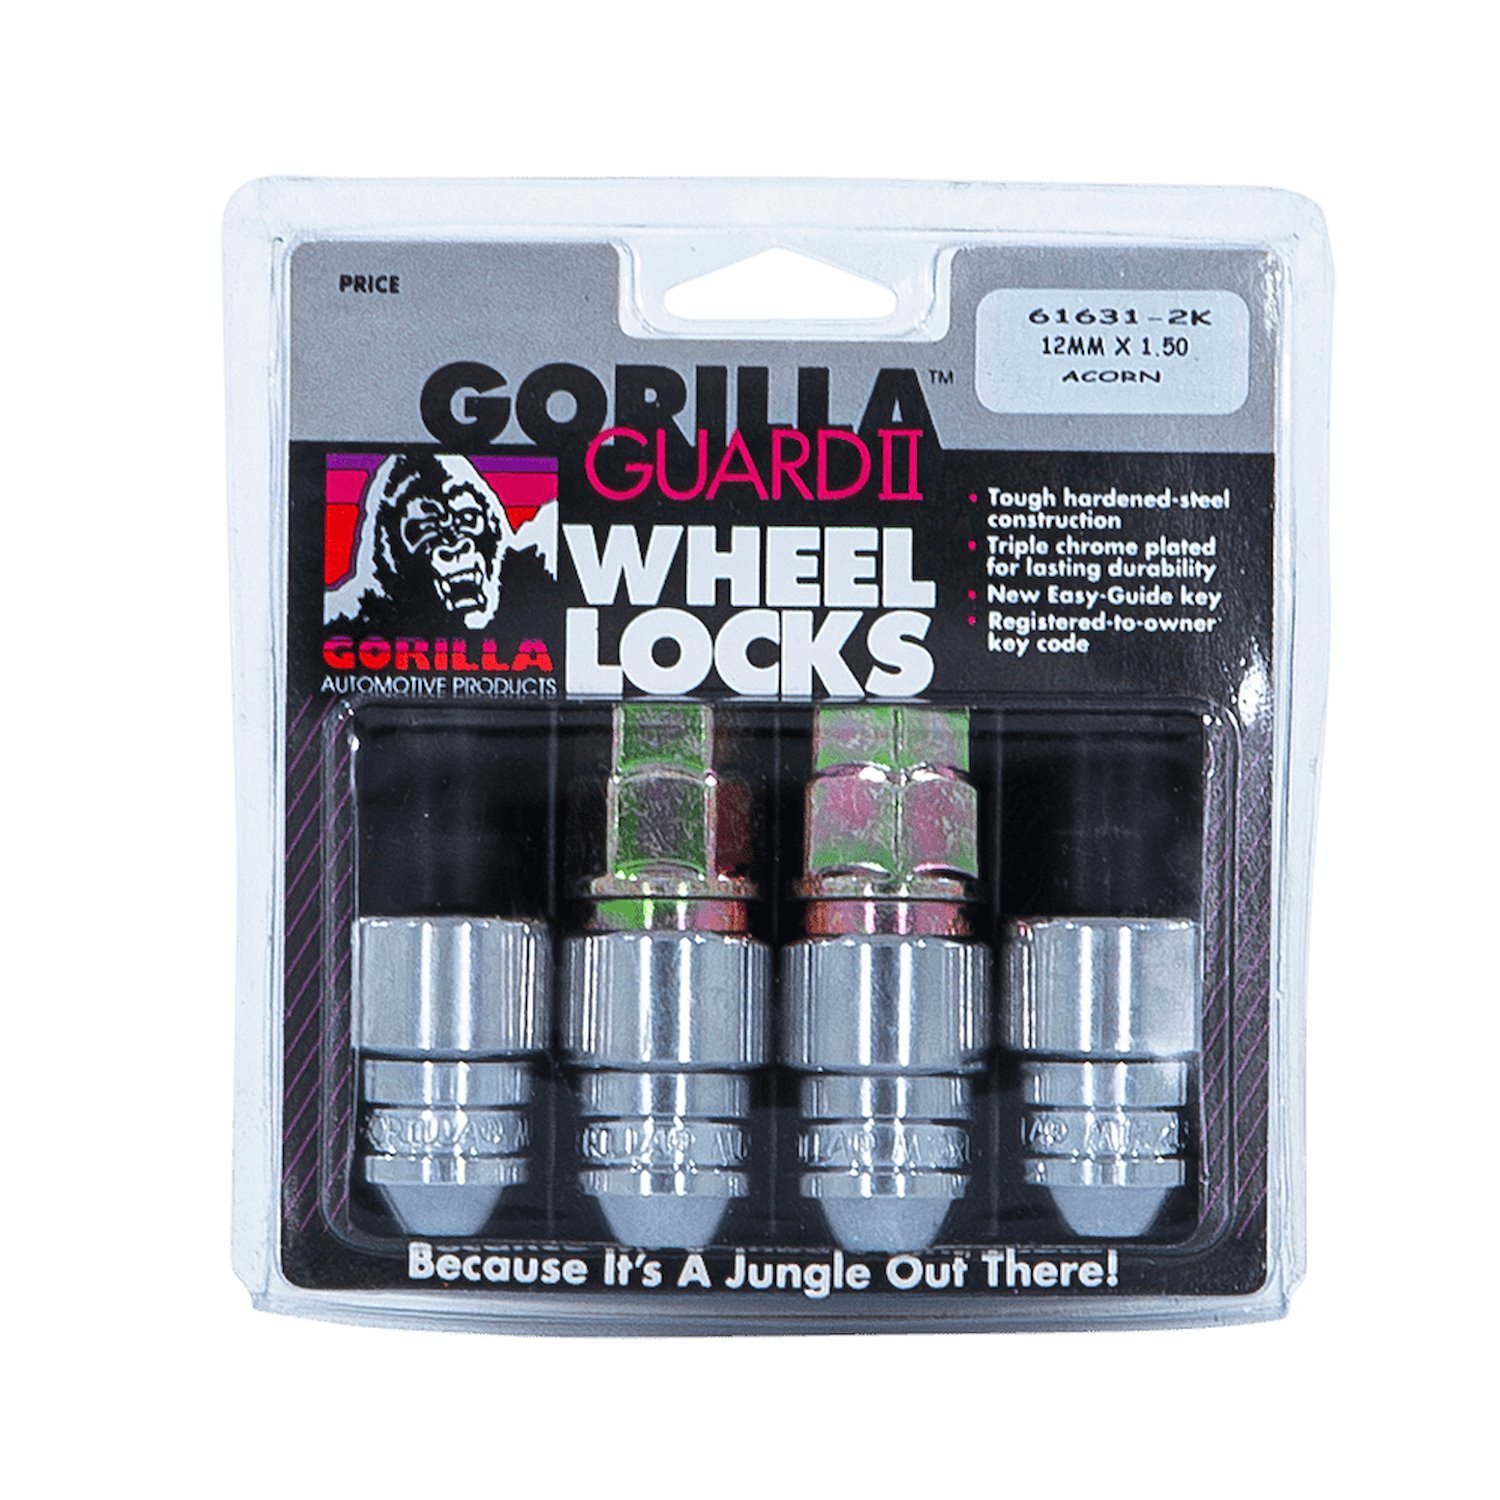 61631-2K Gorilla Guard Acorn Wheel Lock, 12 mm x 1.50, Chrome, 2Key